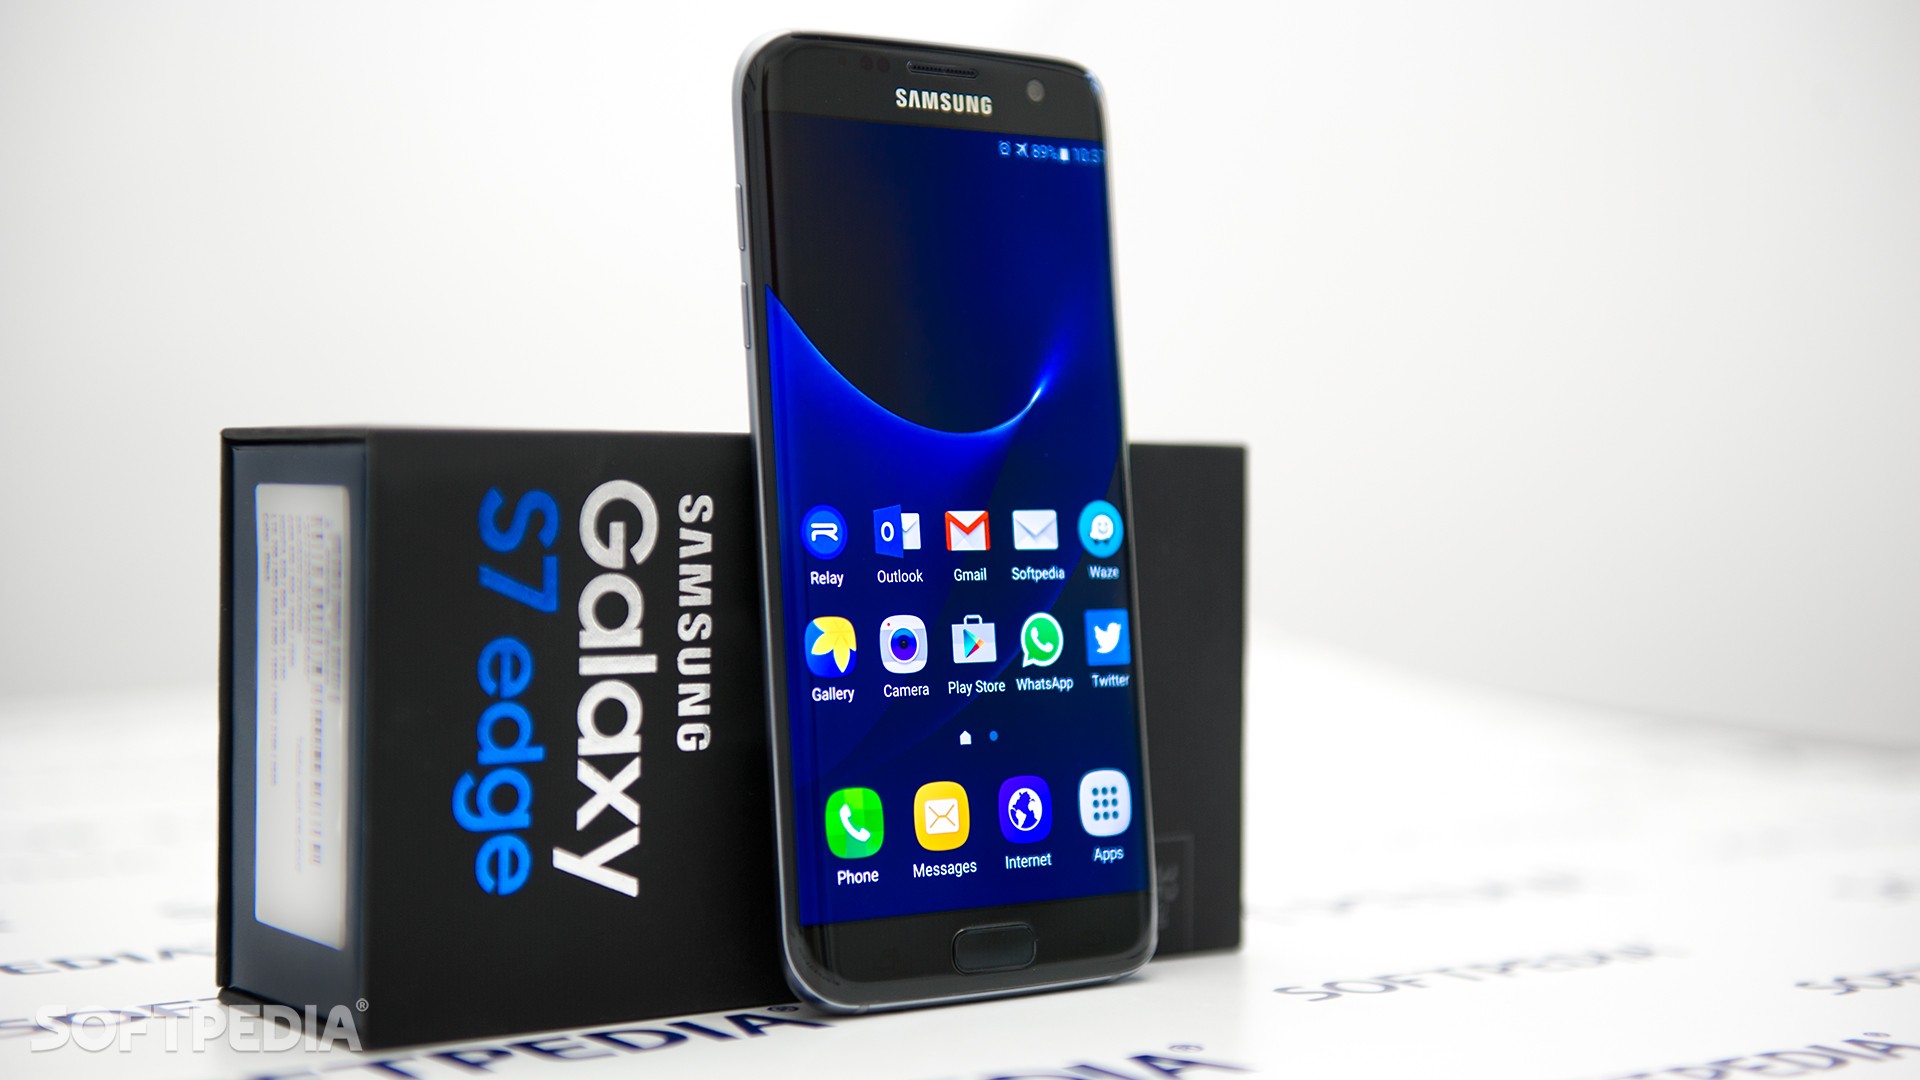 Samsung Galaxy S7 Clone Looks